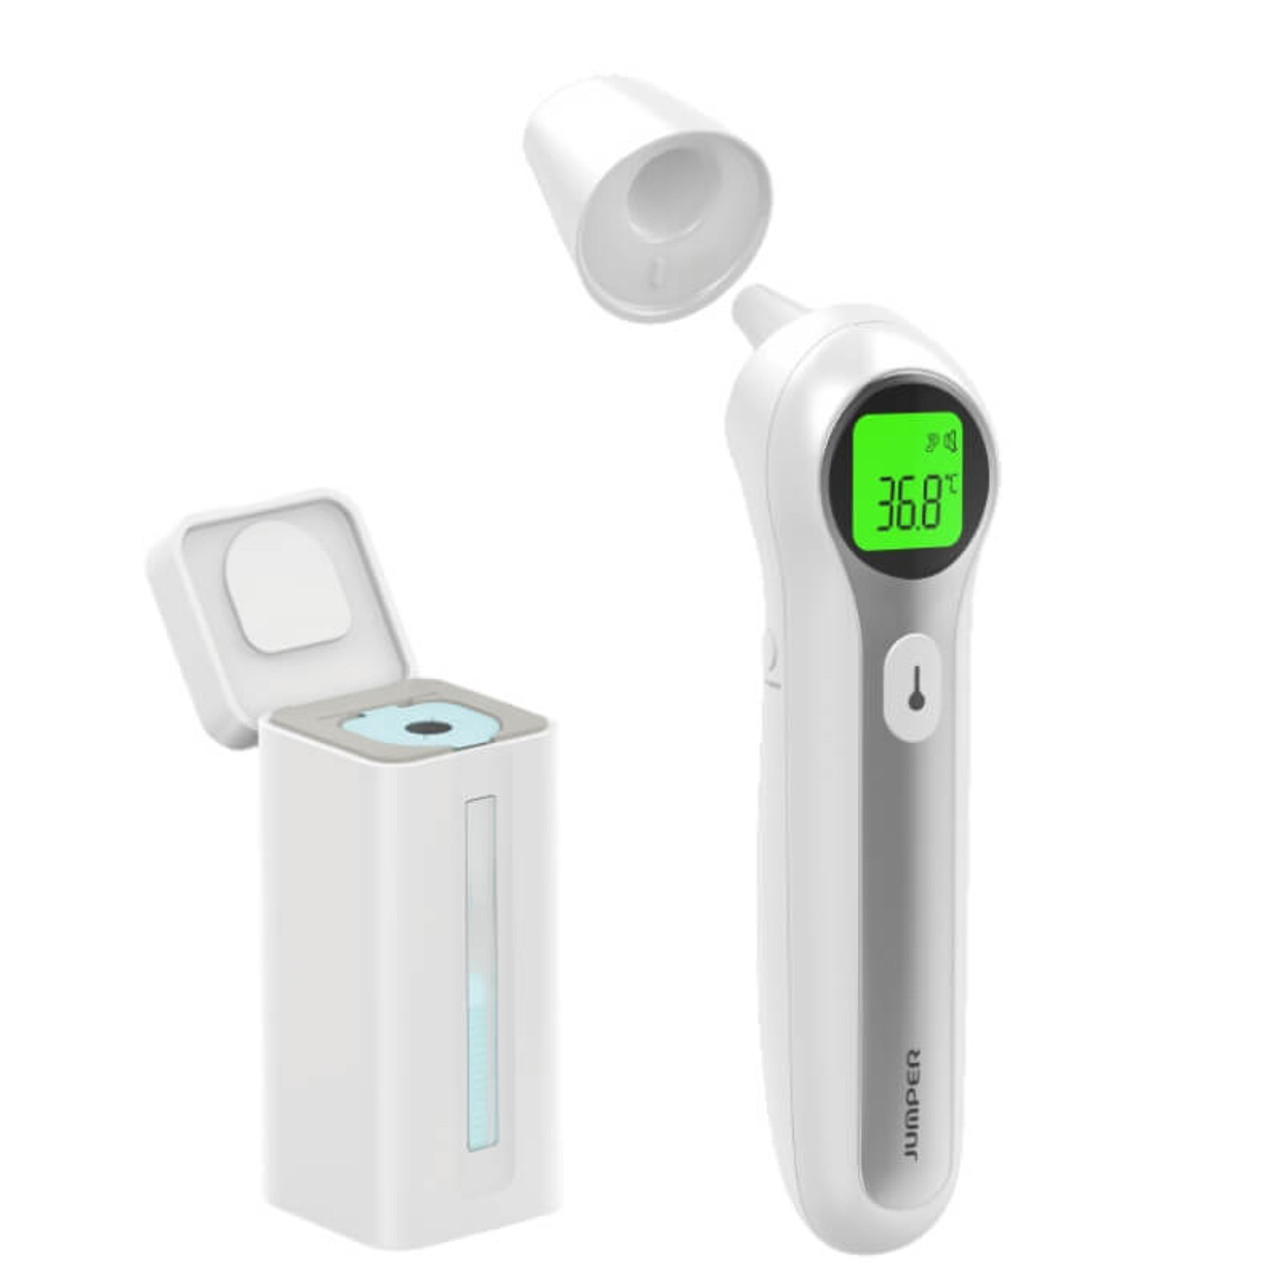 Termómetro infrarrojo para bebés  How it works, Application & Advantages